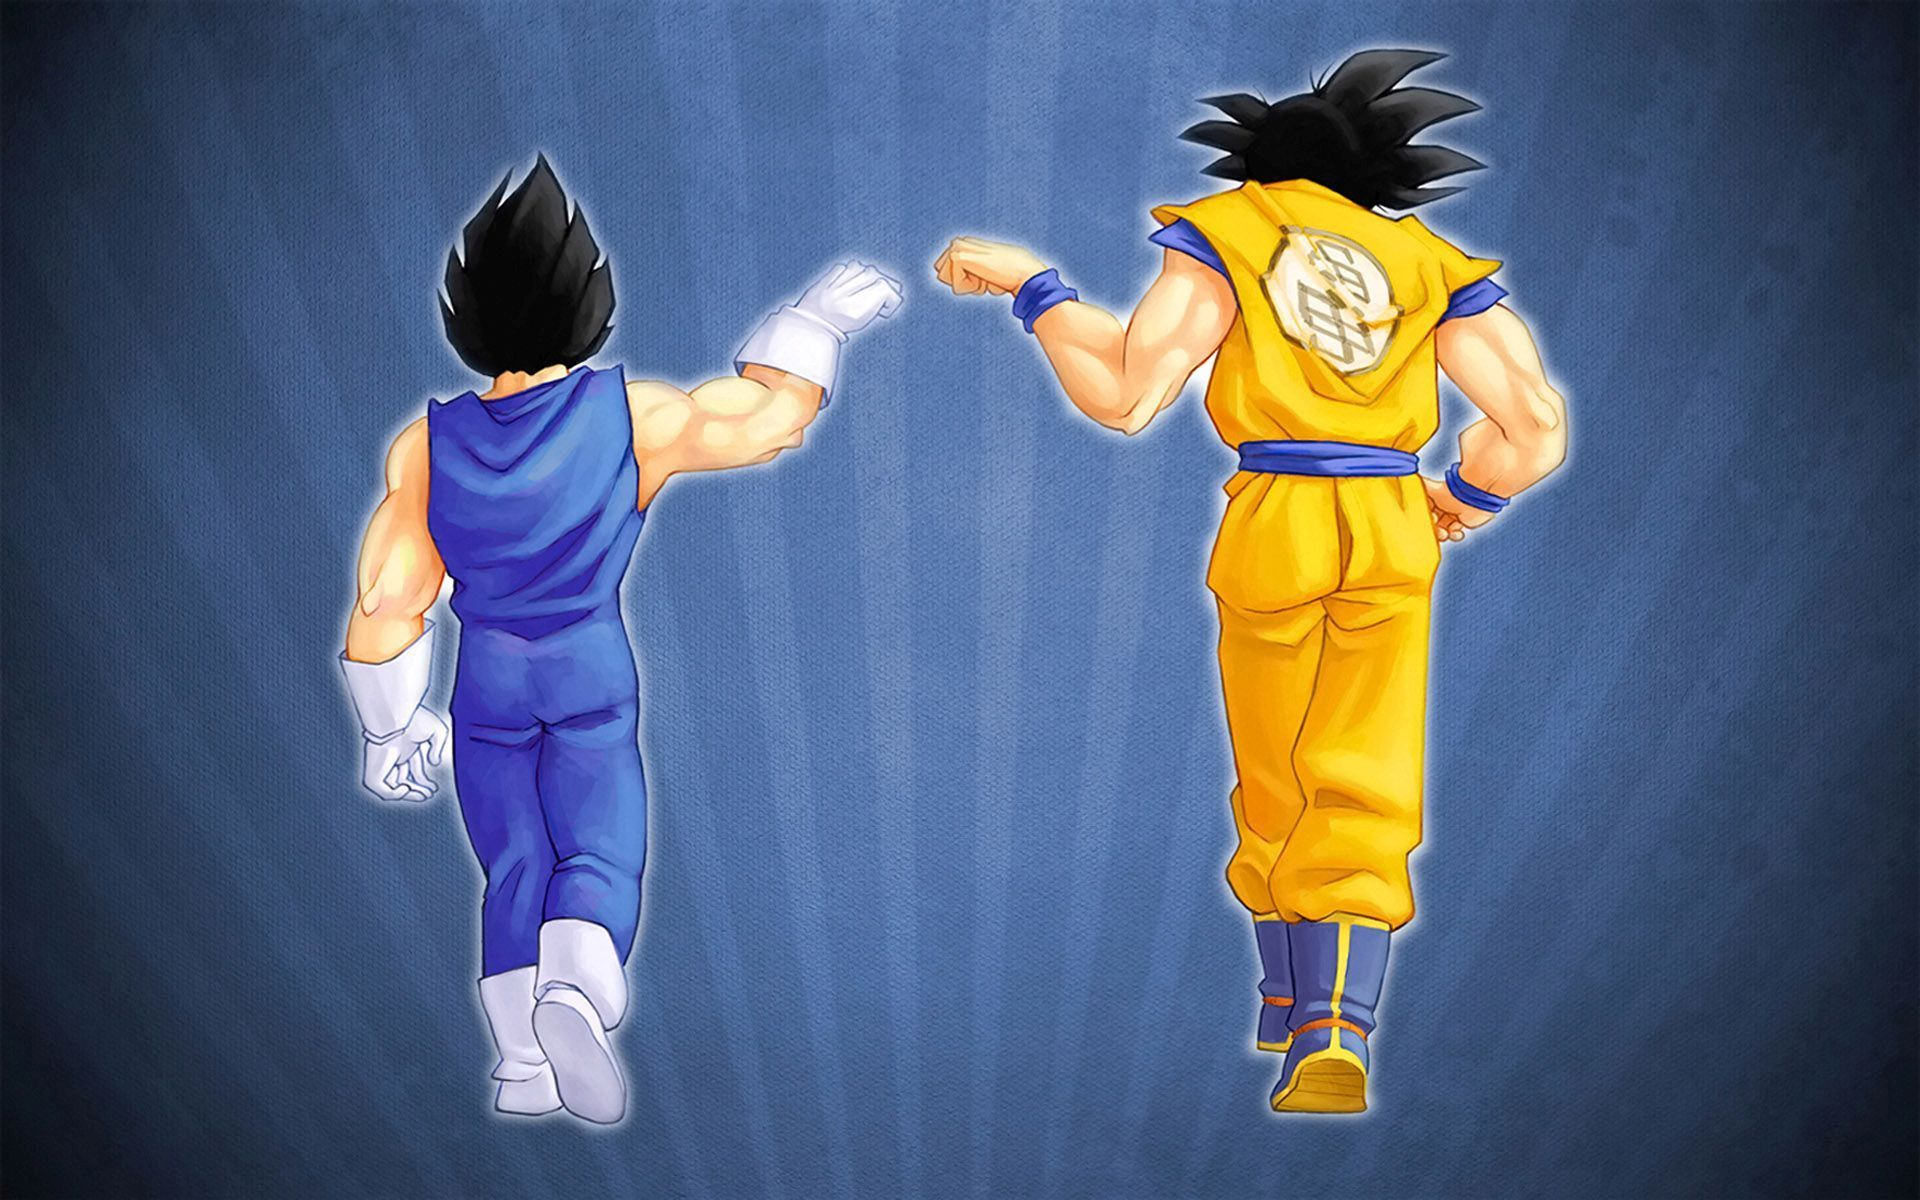 Goku and Vegeta fist bump